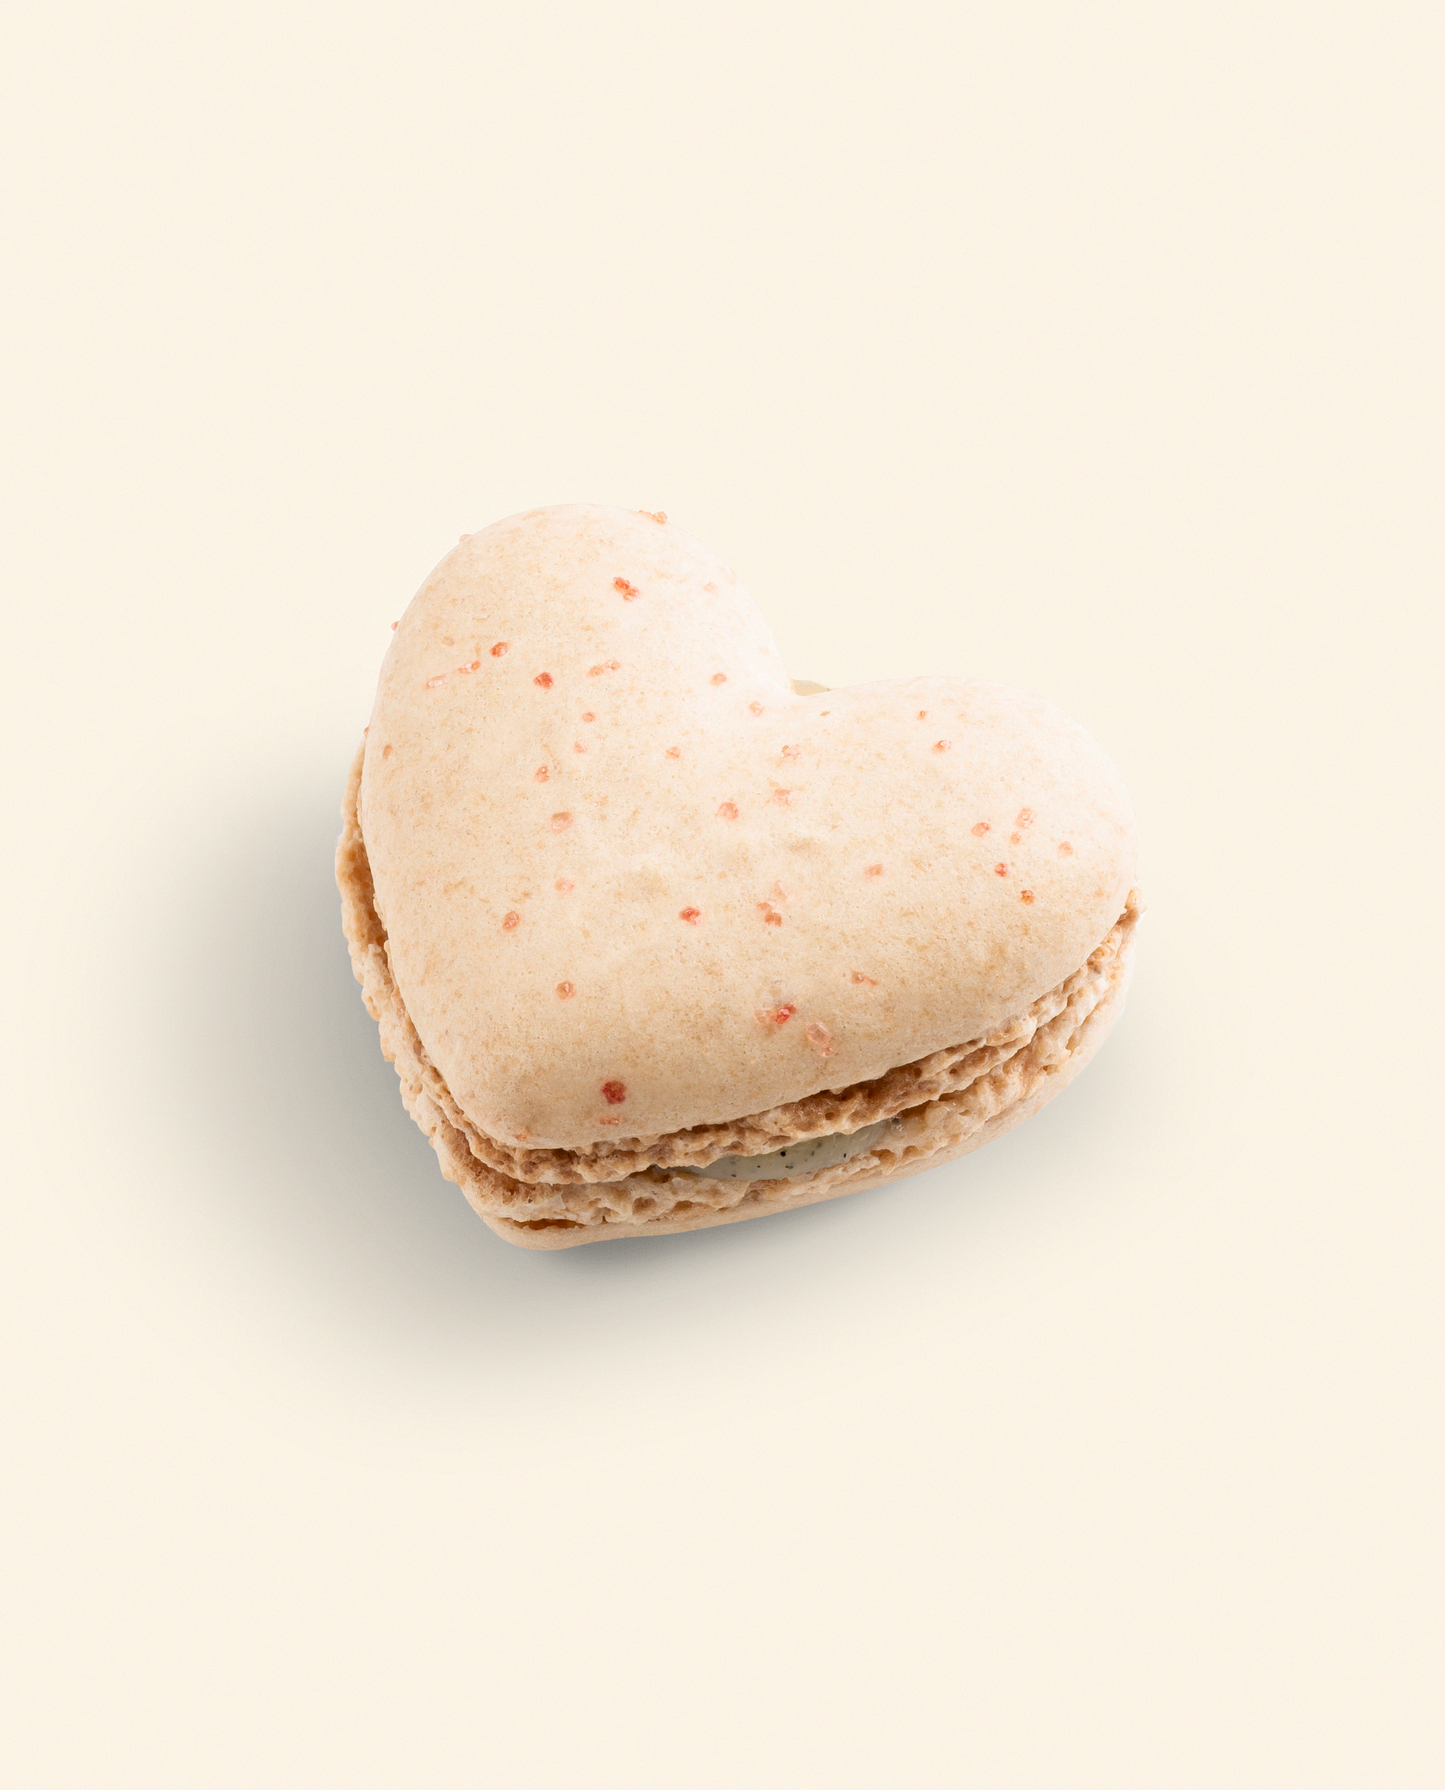 Heart Macarons – 24 Ct